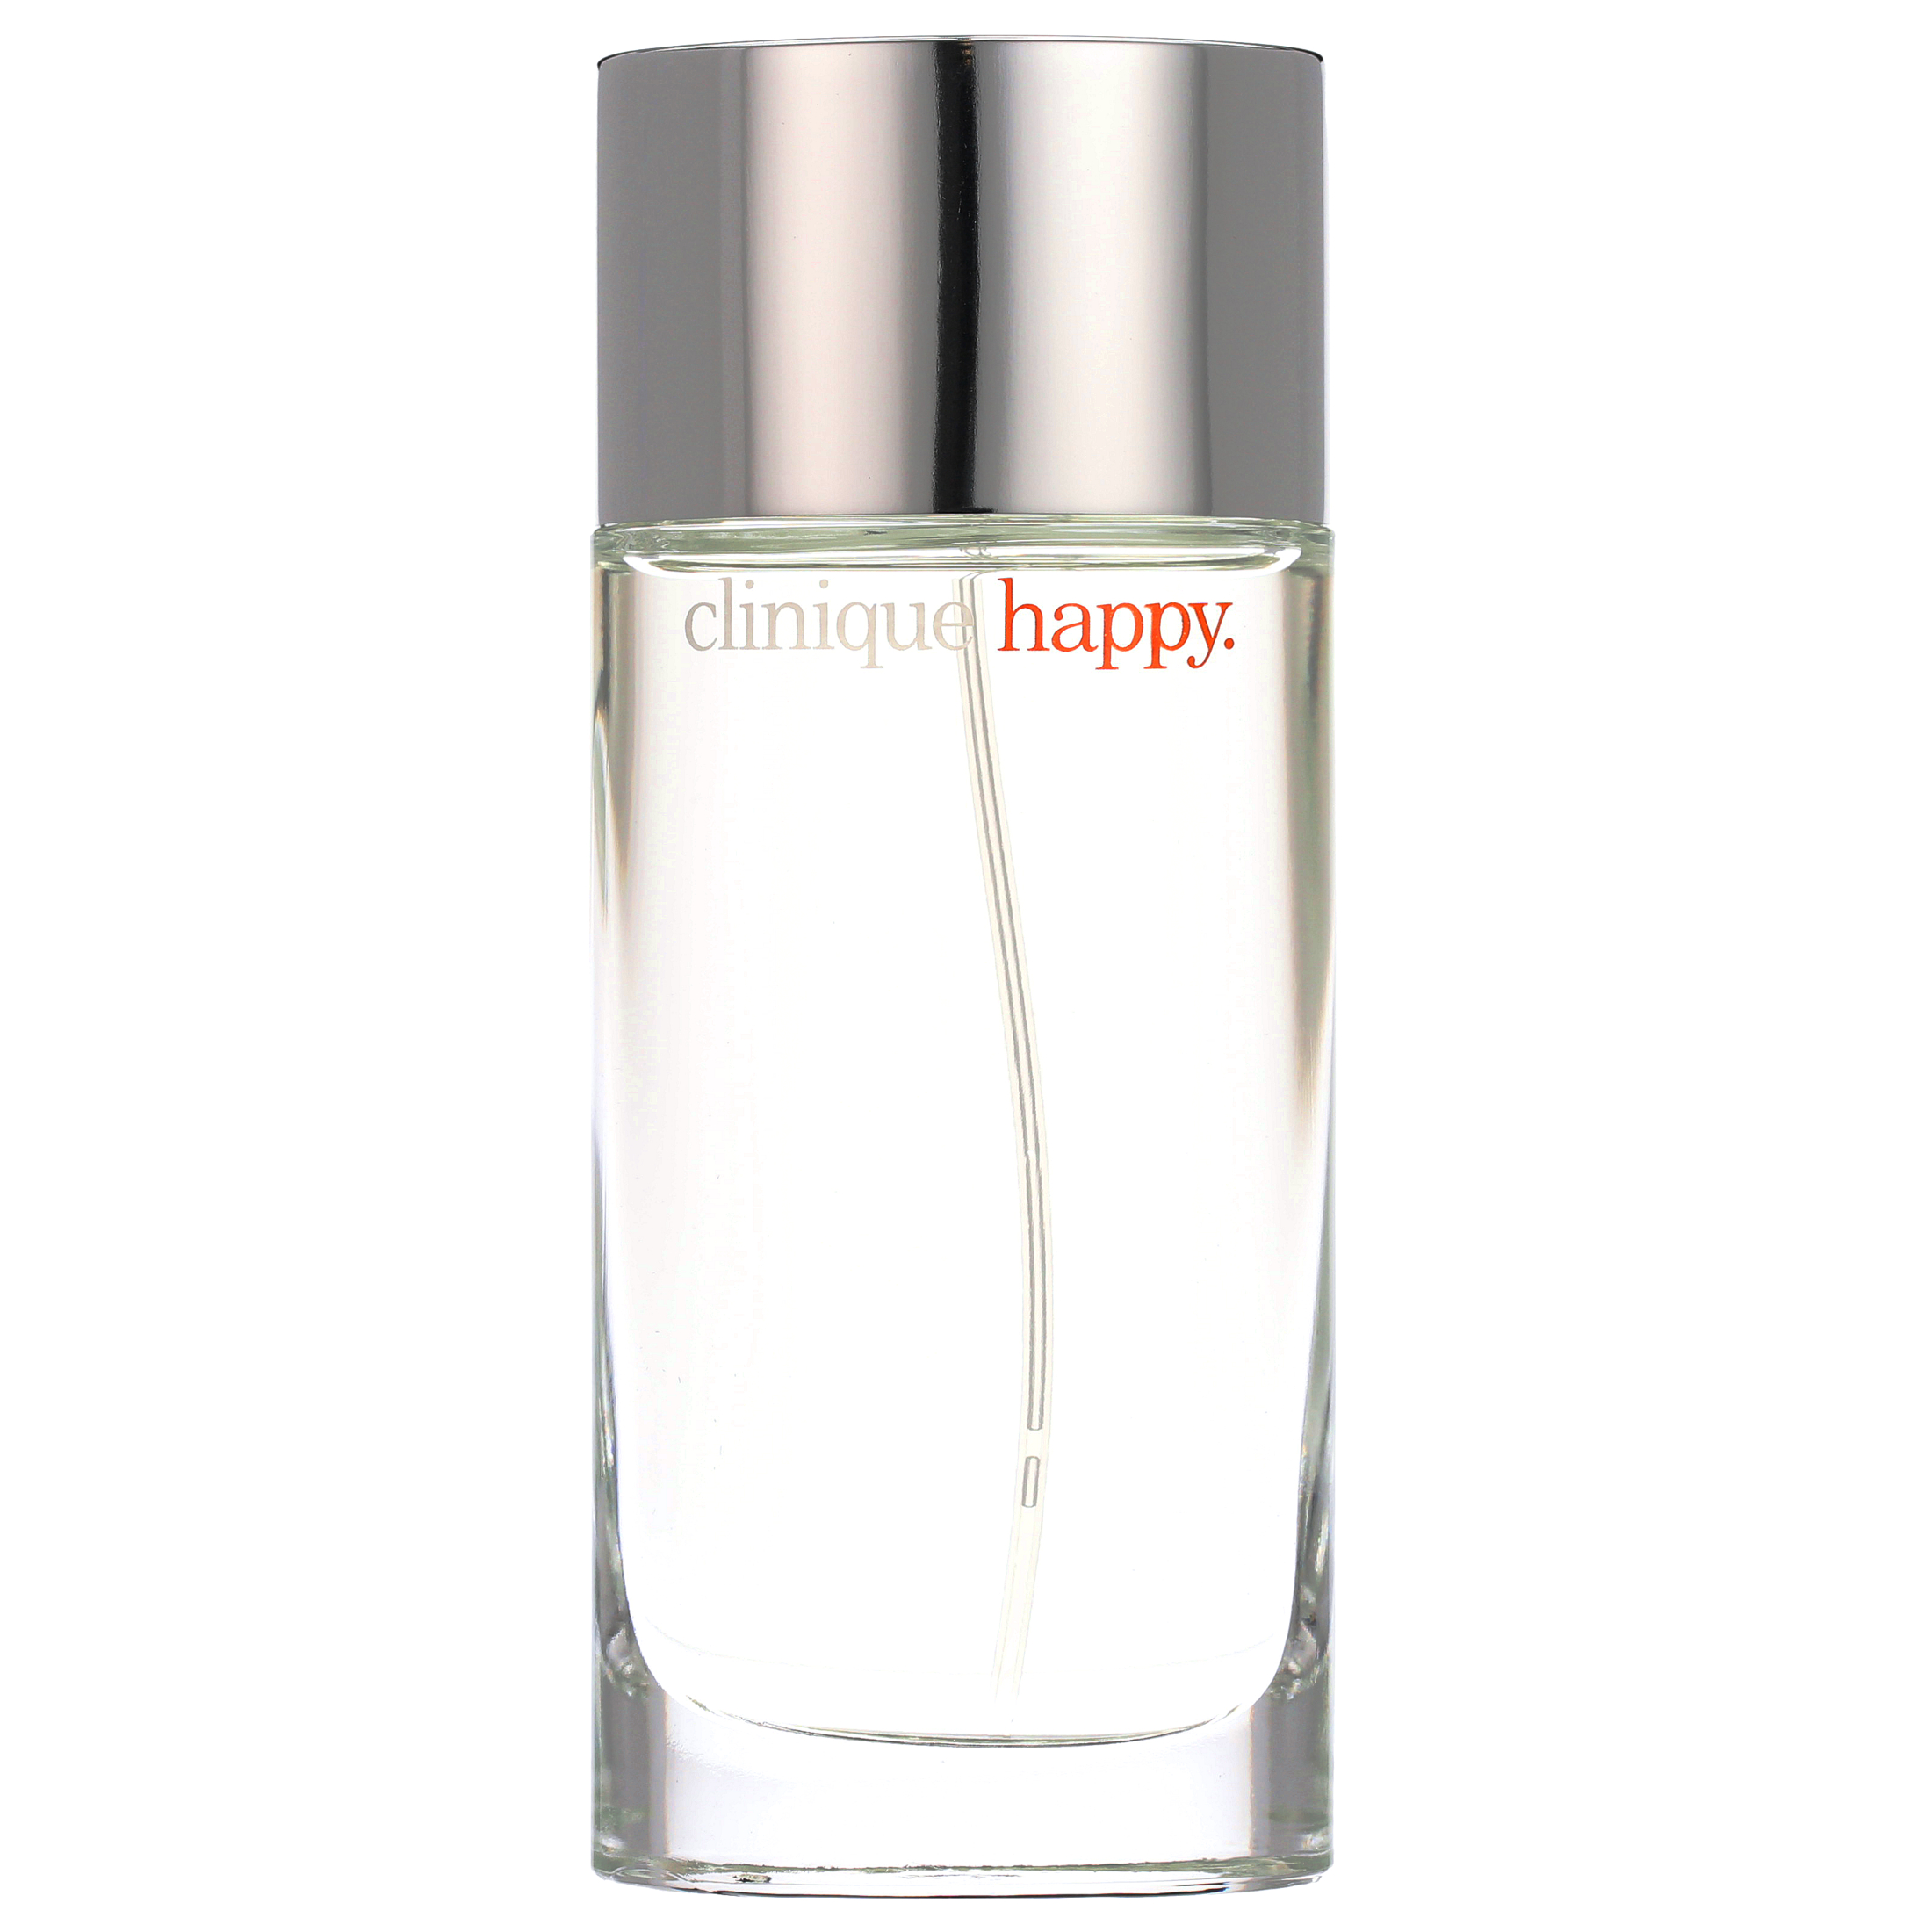 Clinique Happy Eau De Parfum Spray, Perfume for Women, 3.4 oz - image 3 of 5